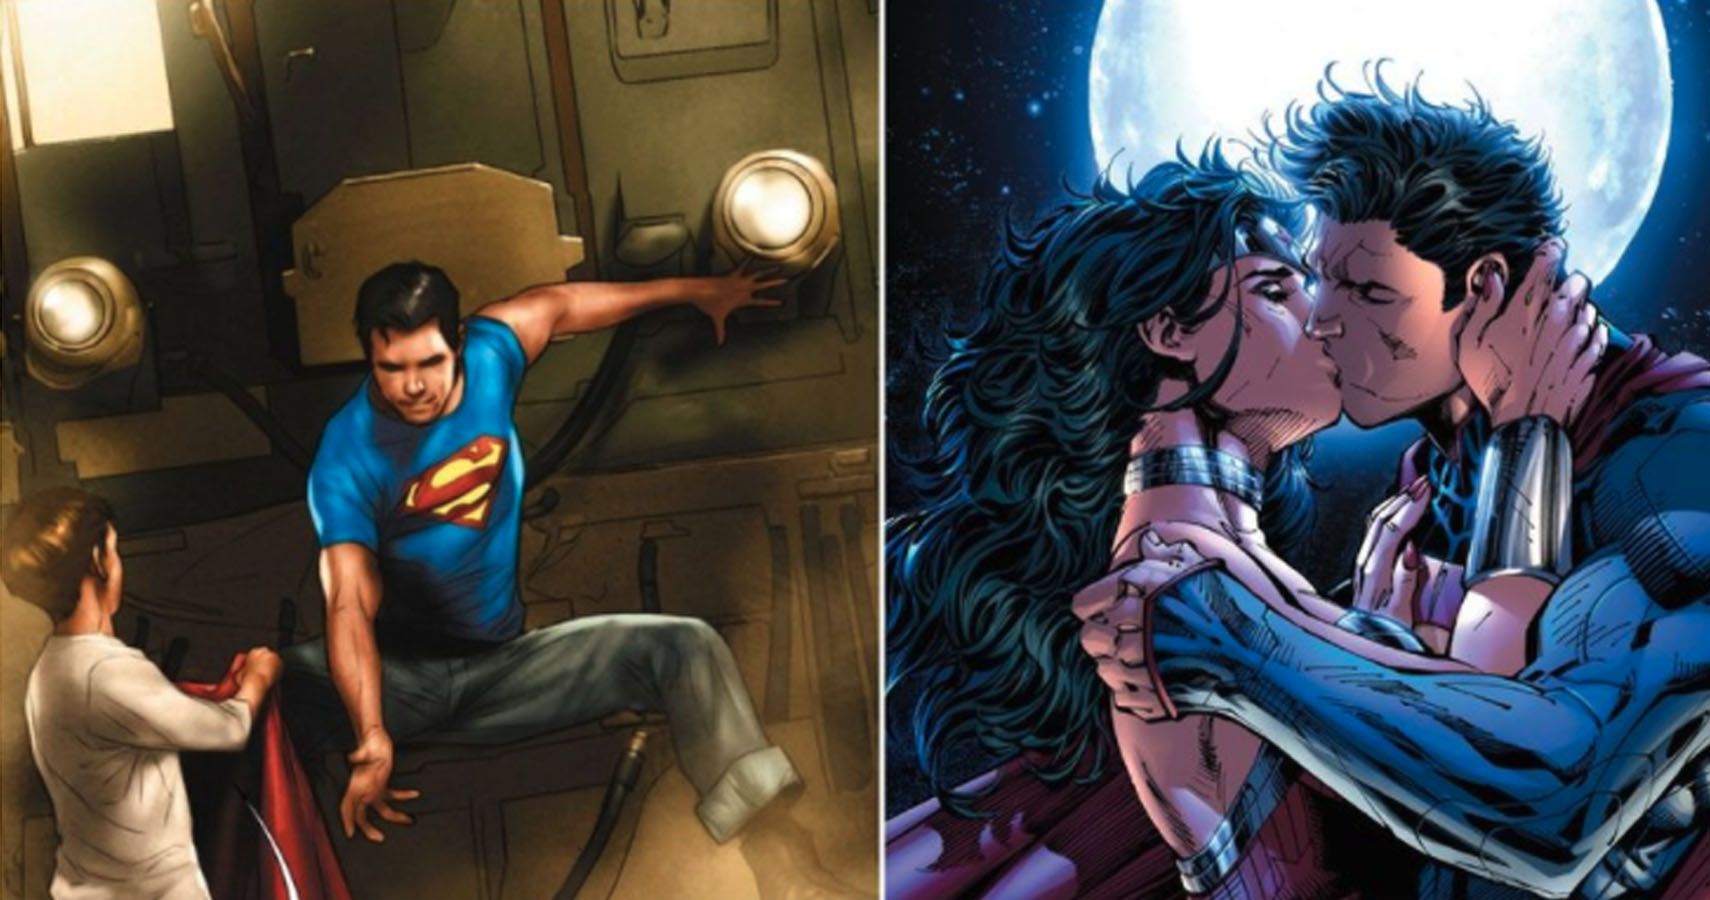 wonder woman and superman kissing